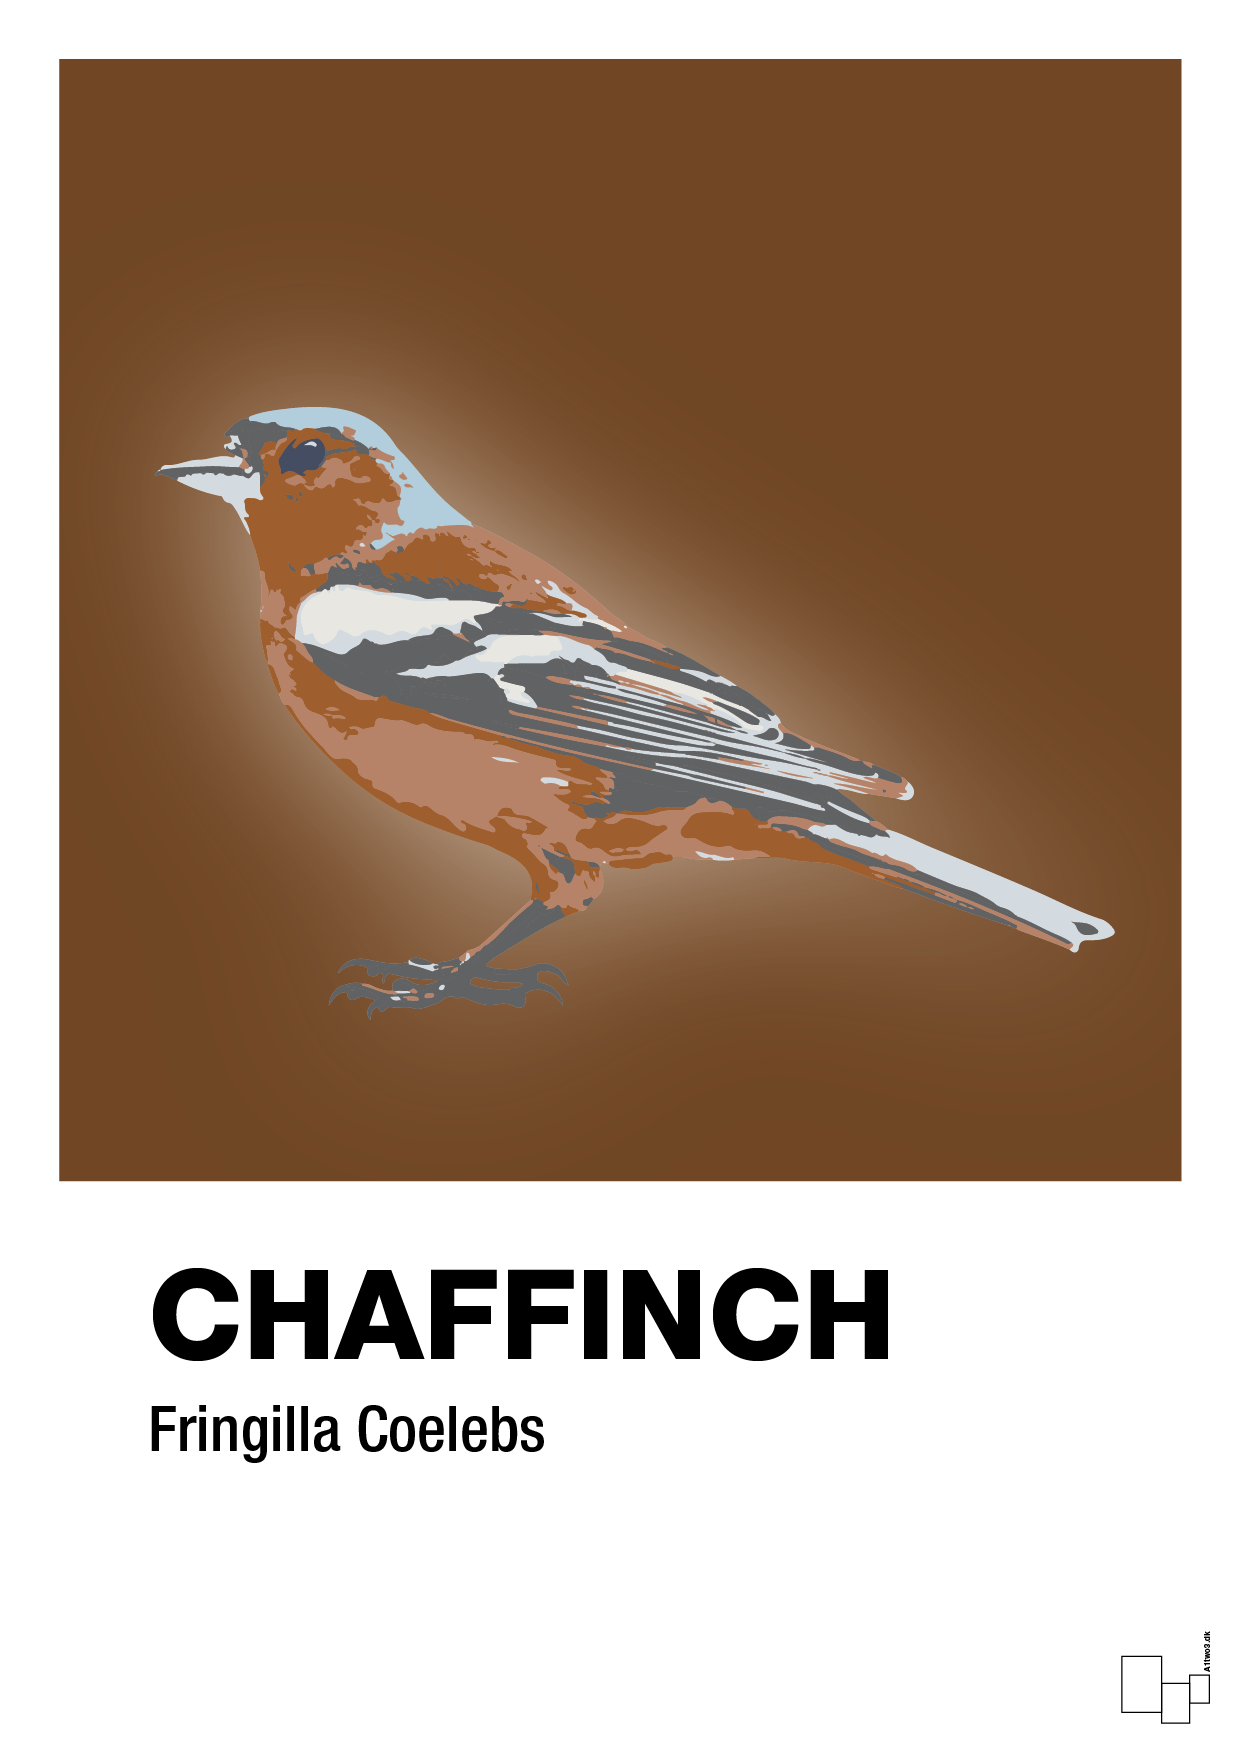 chaffinch - Plakat med Videnskab i Dark Brown